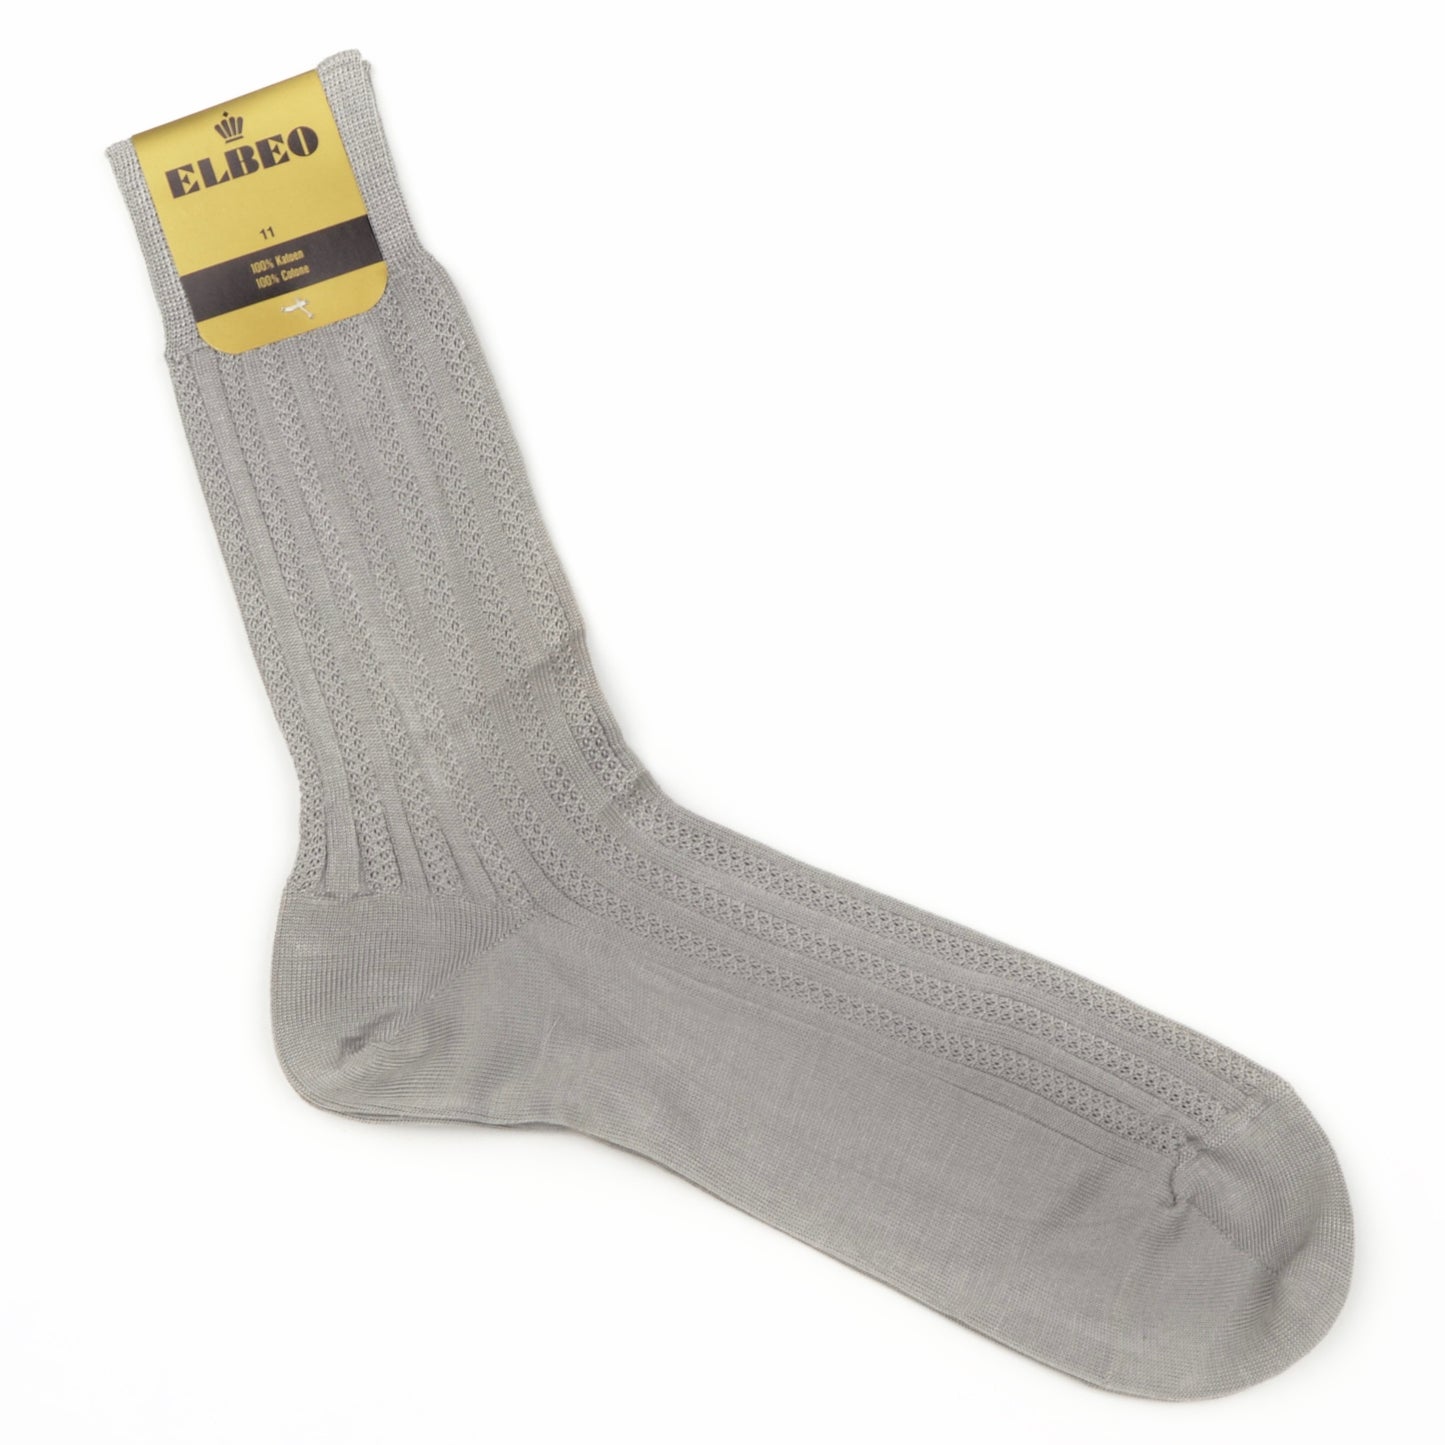 NOS Elbeo Cotton Socks Size 11  - Light Grey